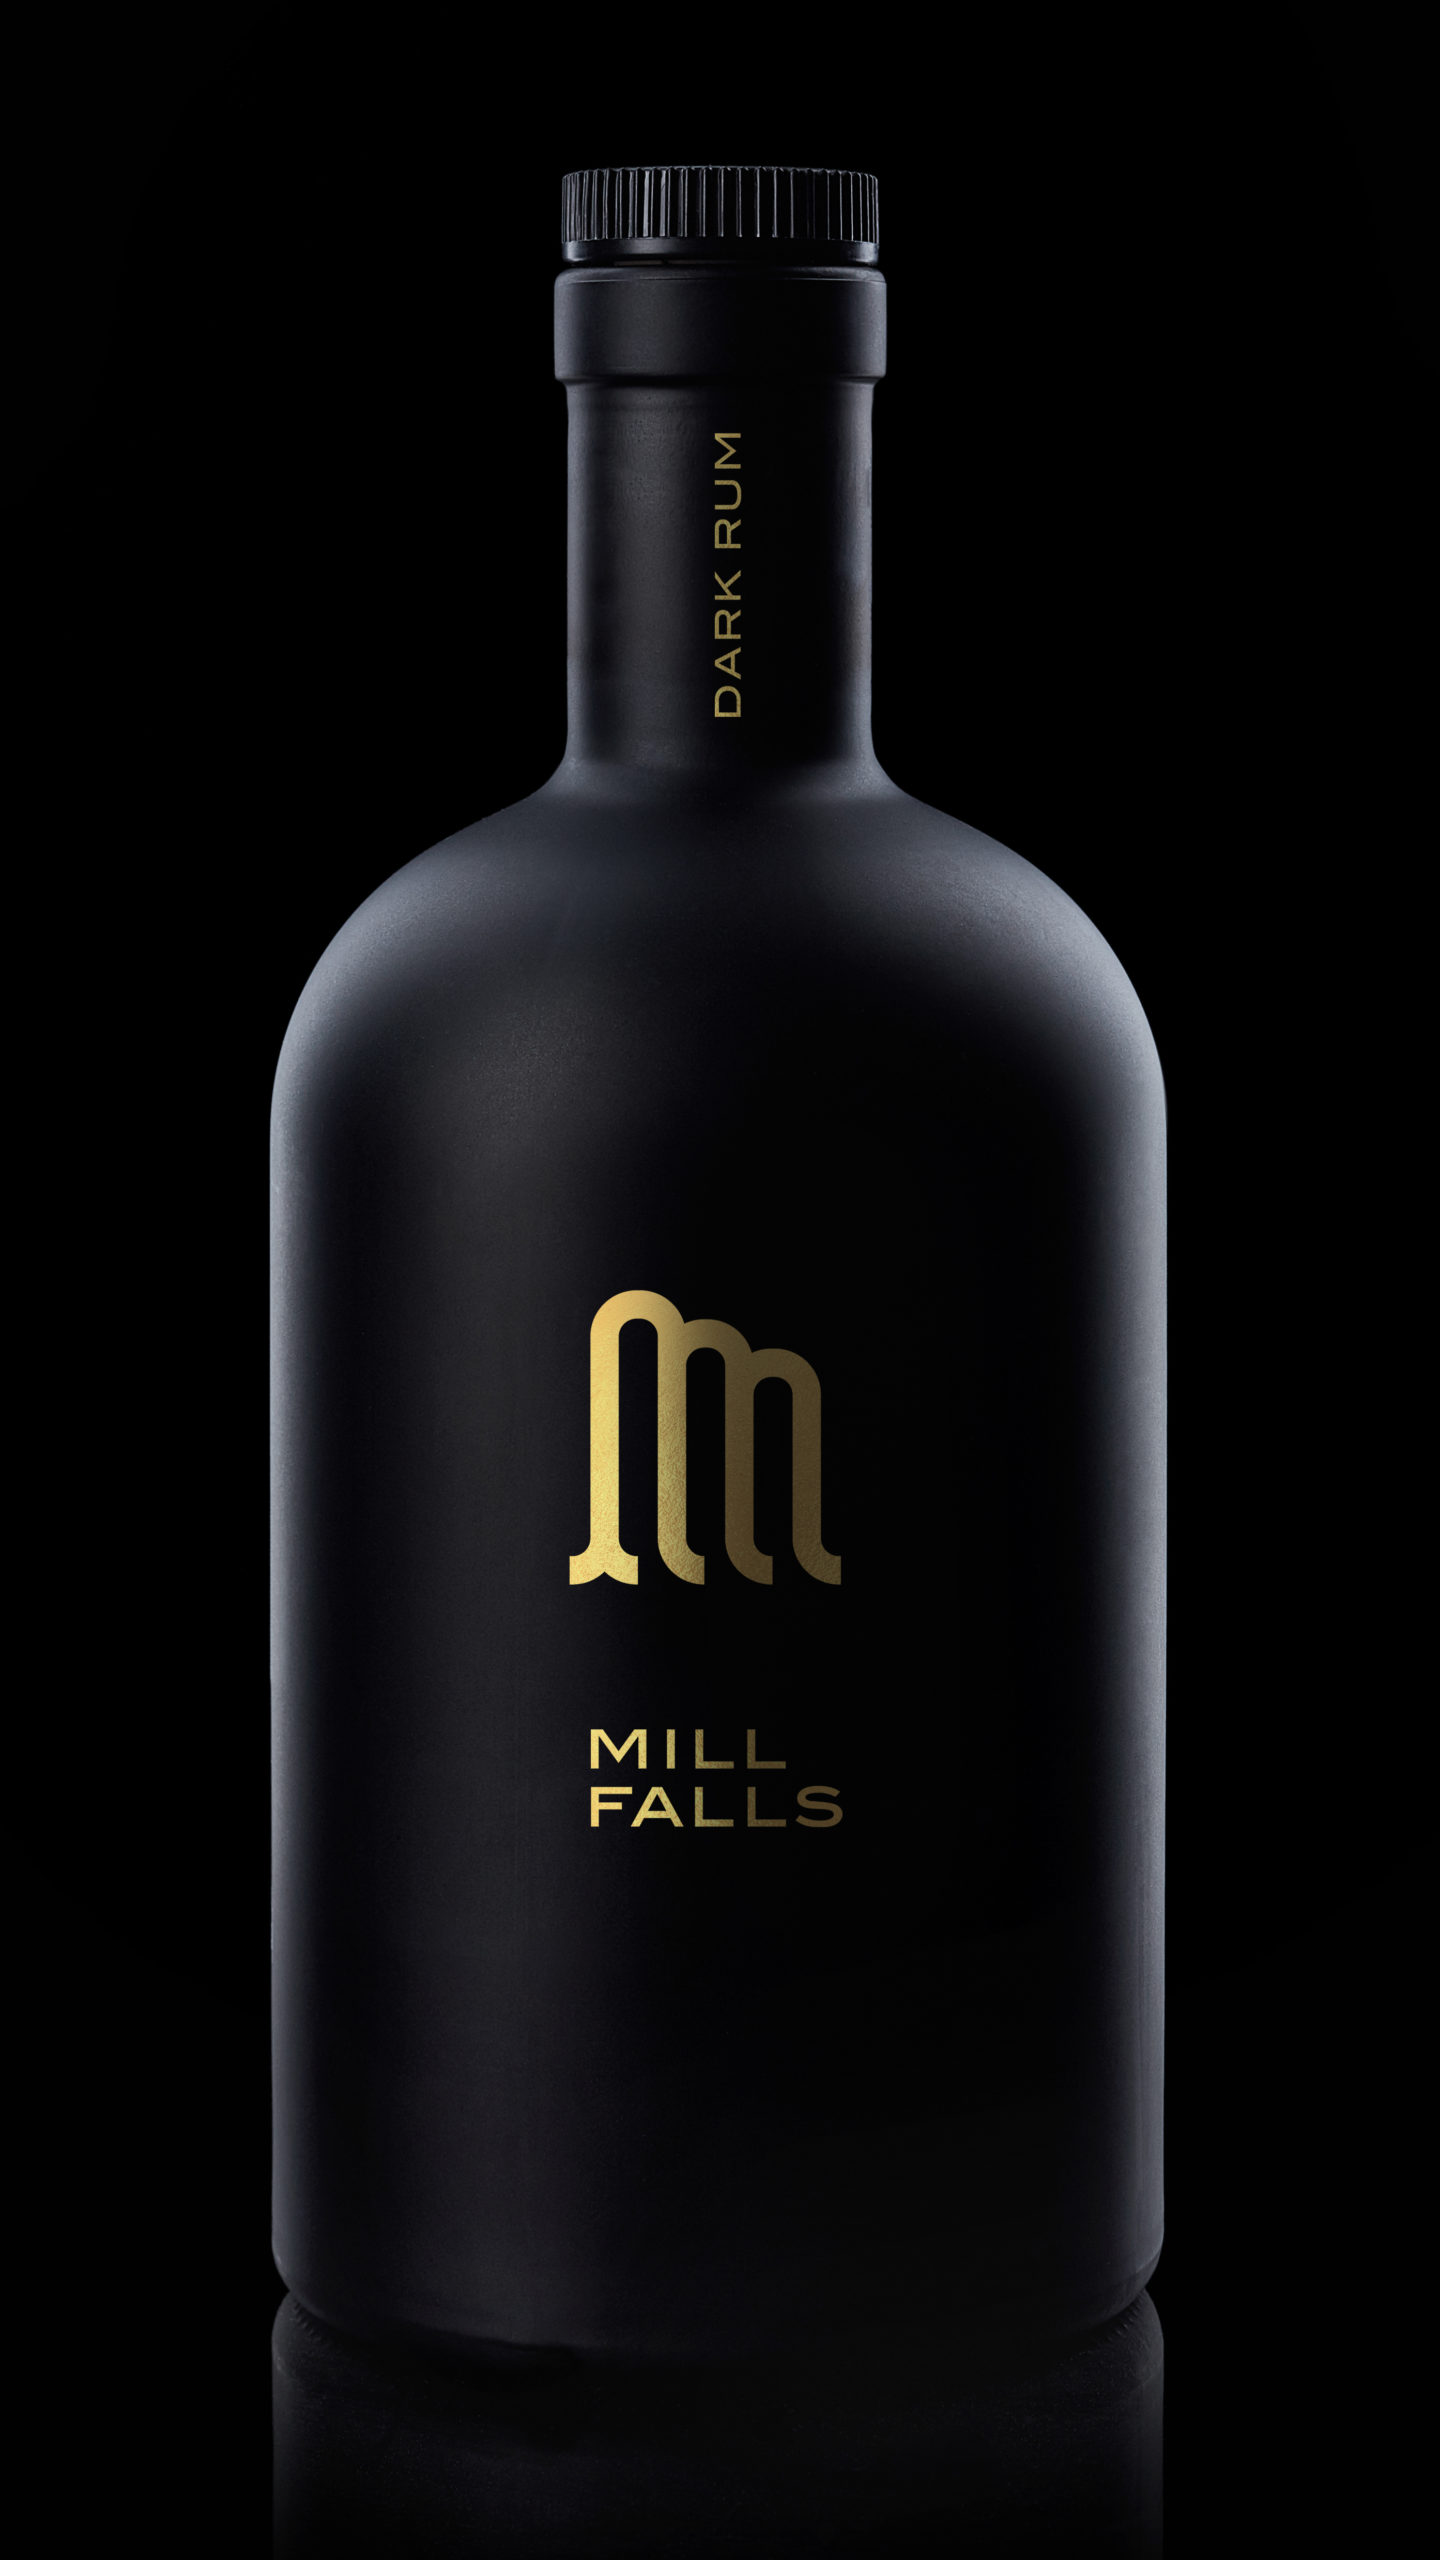 A bottle of Mill Falls dark rum